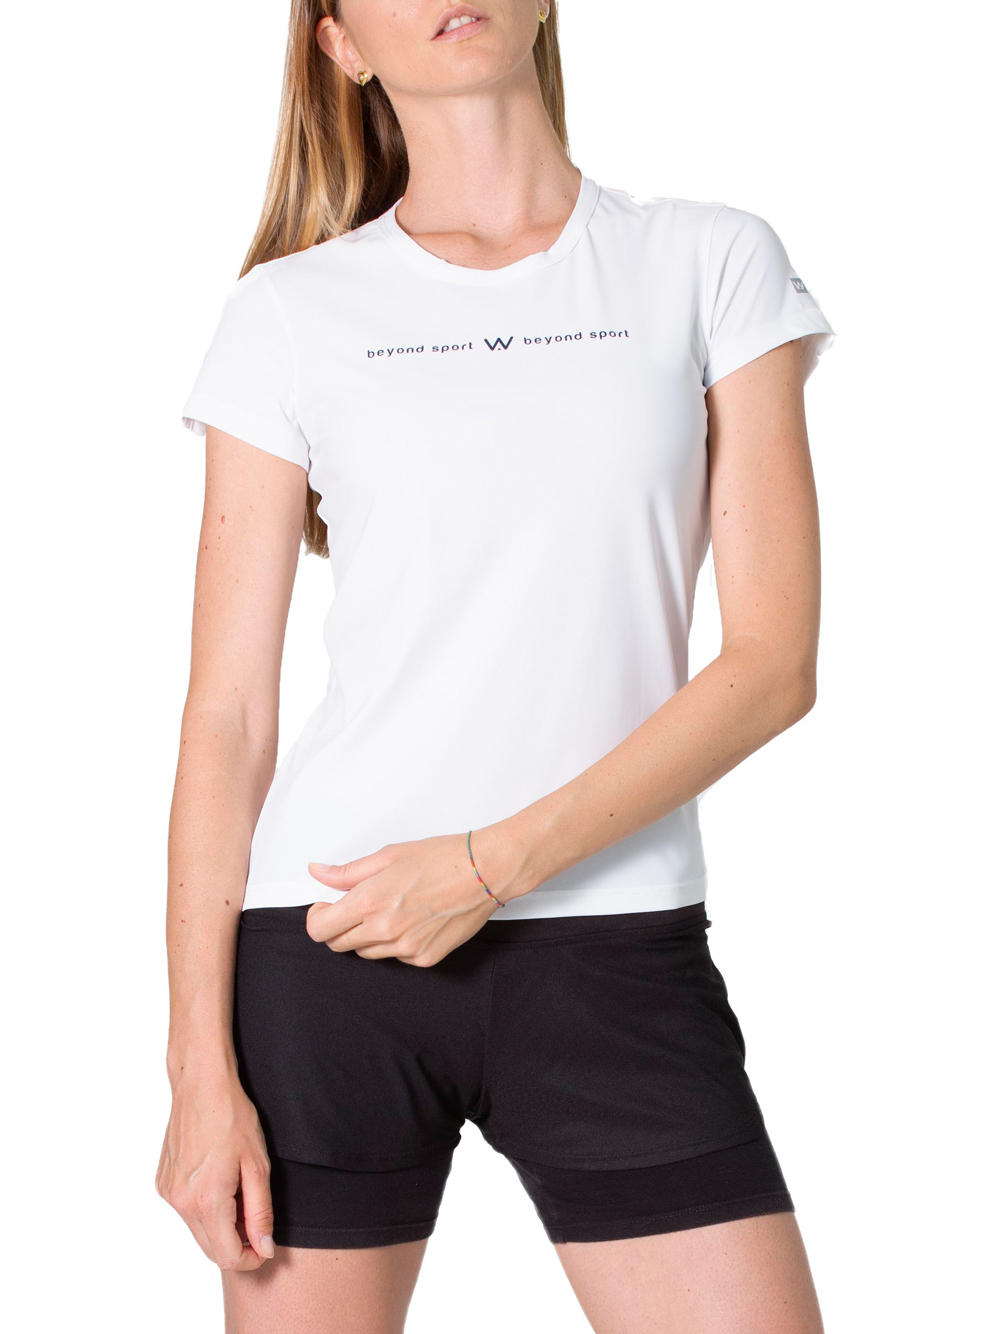 Immagine t-shirt donna  sport